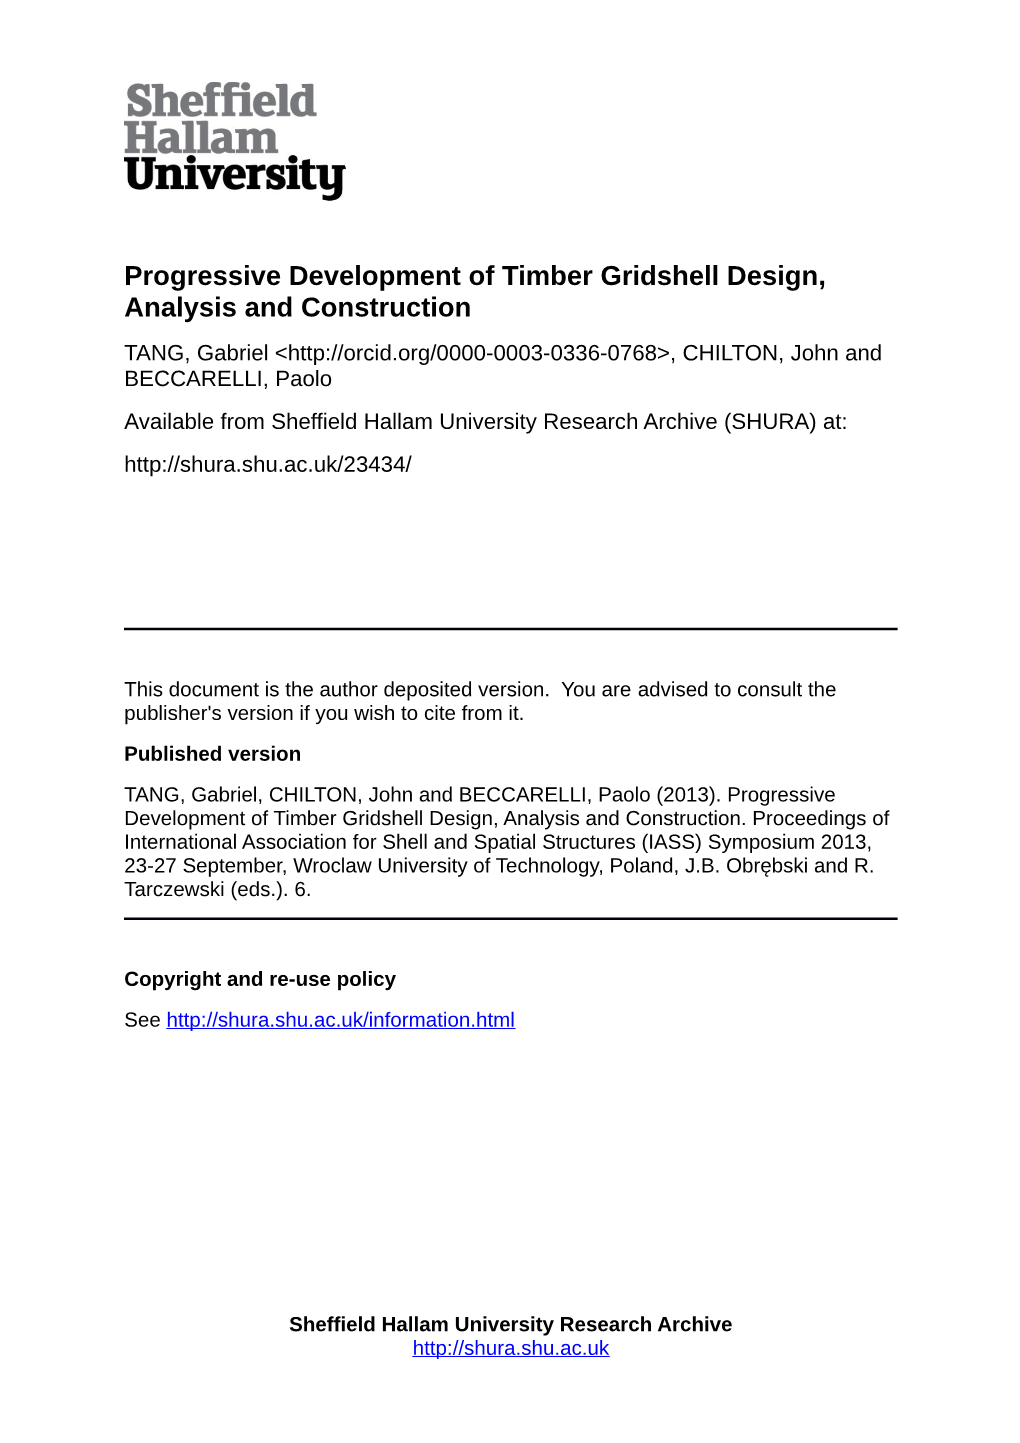 Progressive Development of Timber Gridshell Design, Analysis And